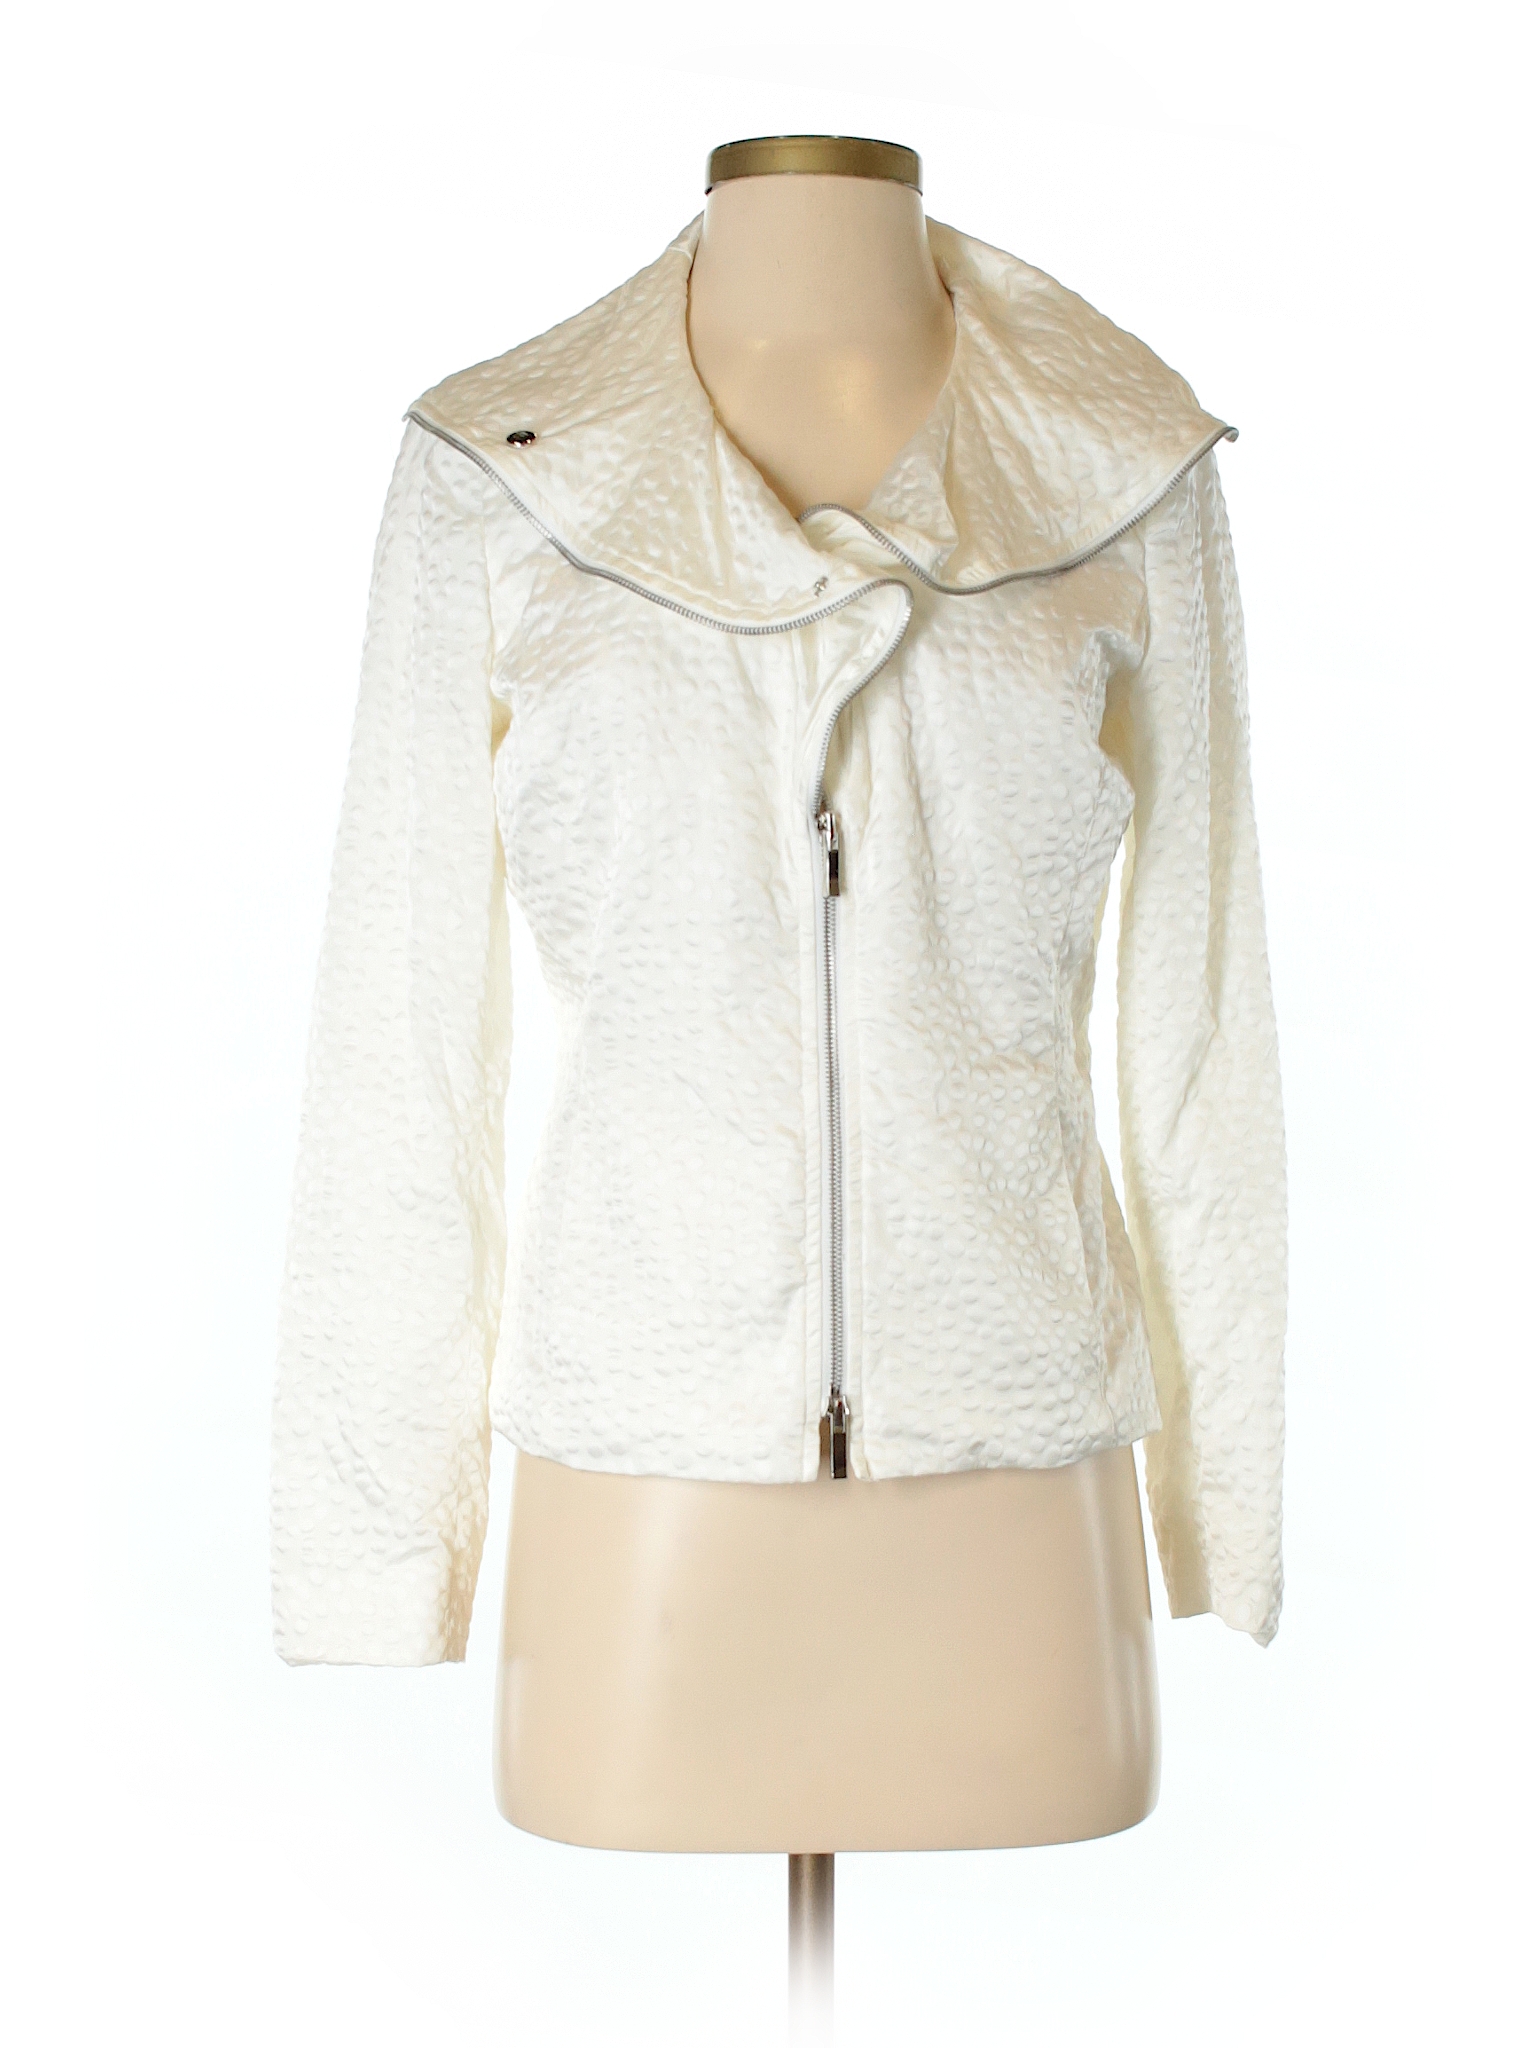 Per Se By Carlisle 100% Nylon Solid White Jacket Size 6 - 78% off | thredUP